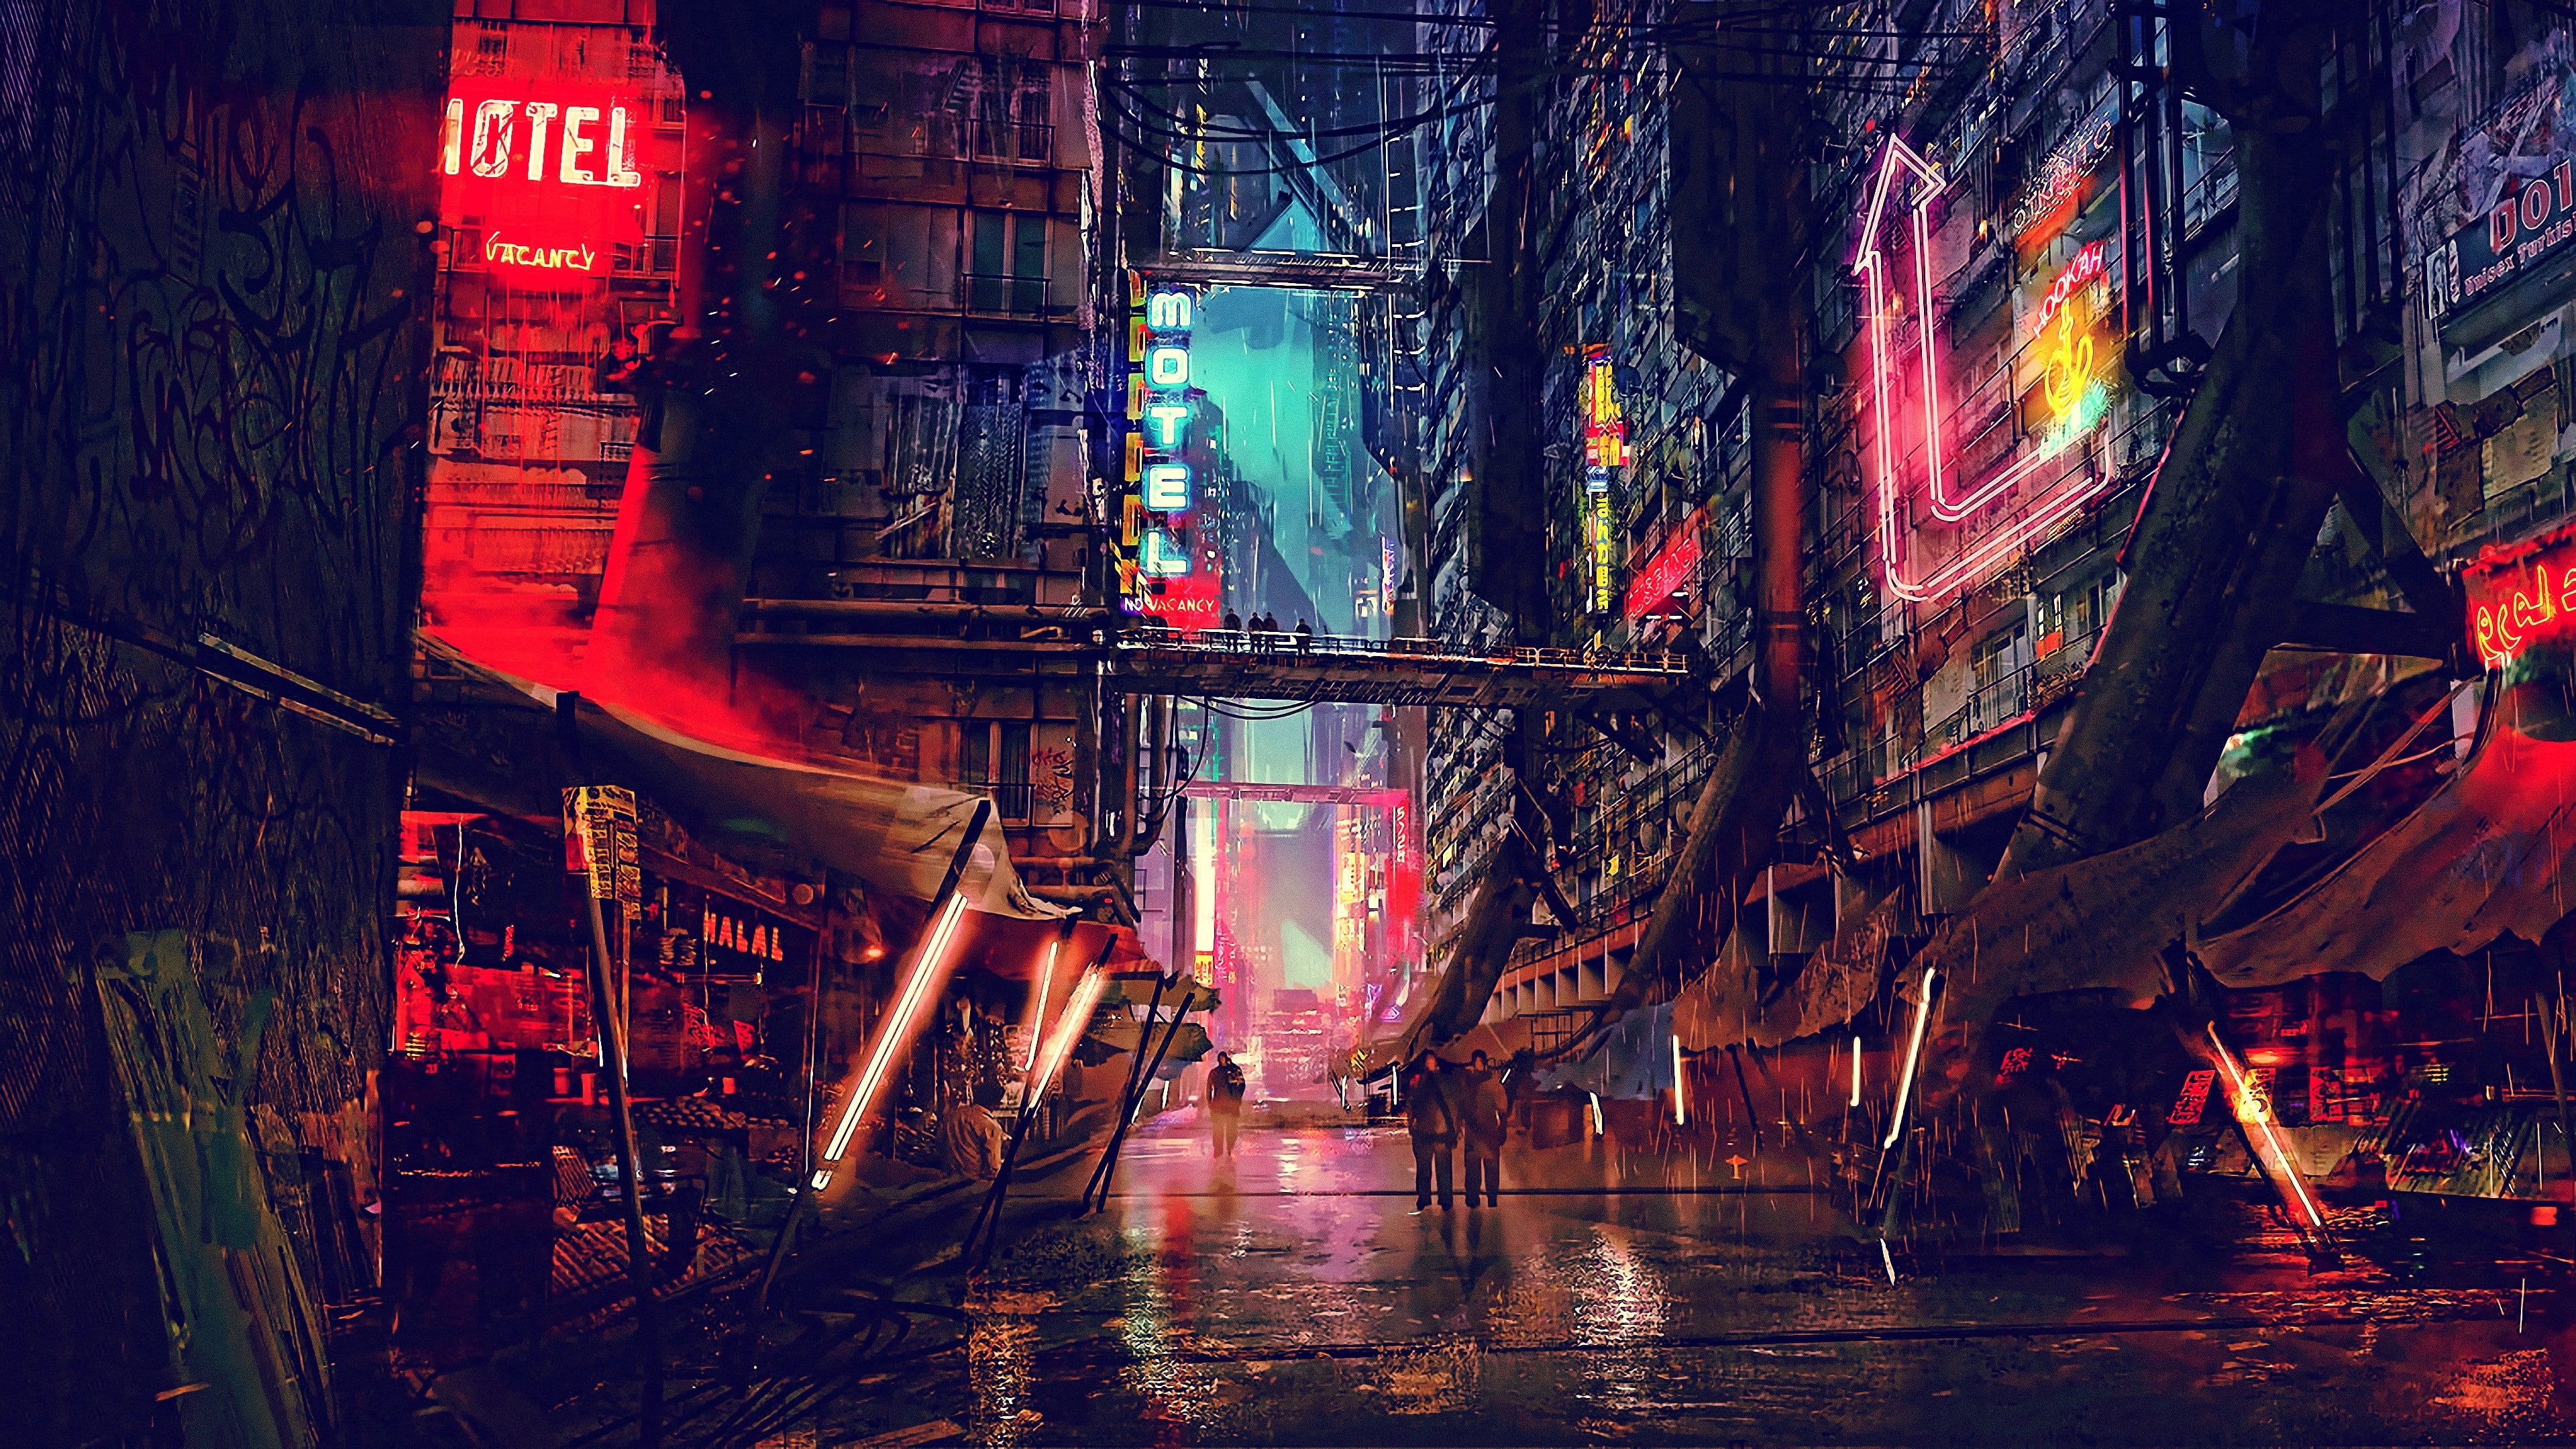 street #art #artwork digital art futuristic city #darkness science fiction # scifi #cyberpunk #city #night. Futuristic city, Building illustration, Cyberpunk city